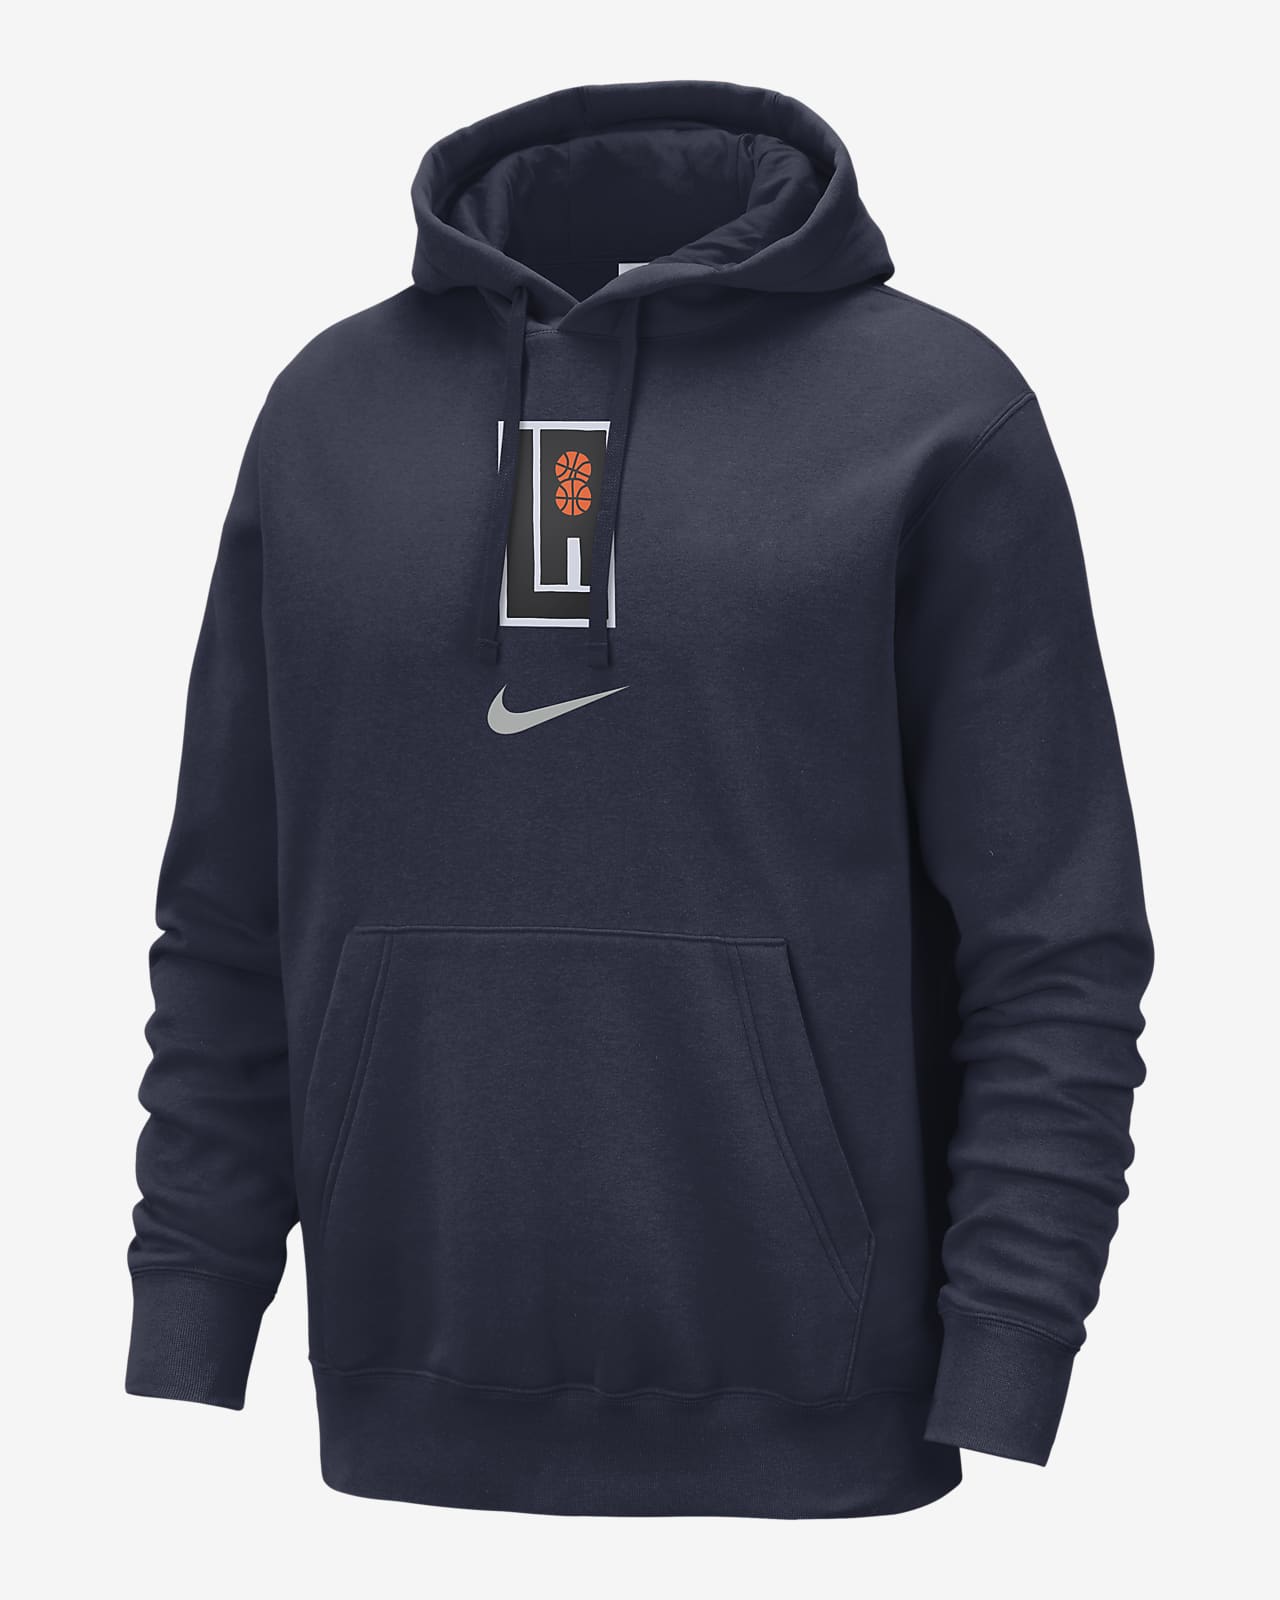 LA Clippers Club Fleece City Edition Men's Nike NBA Pullover Hoodie